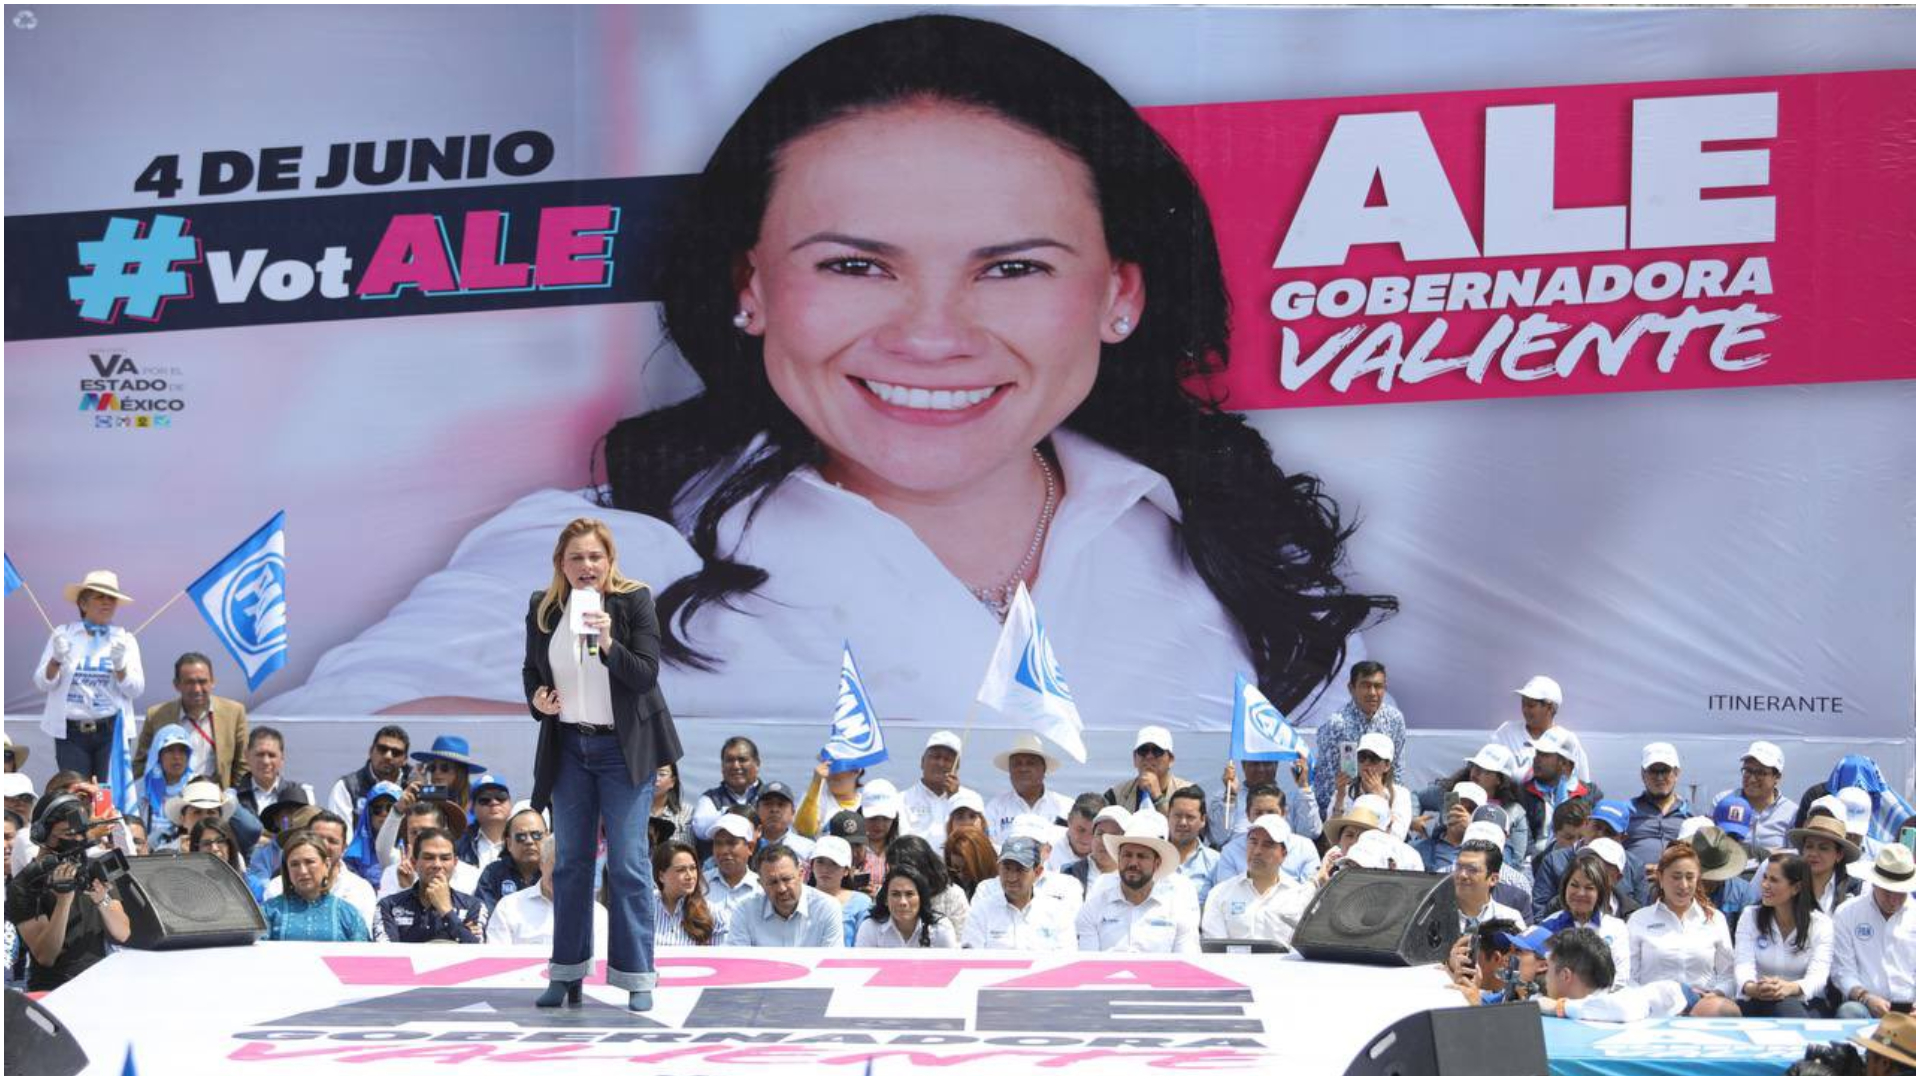 La gobernadora de Chihuahua lanzó fuerte mensaje contra Morena en un mitin de Alejandra del Moral (Twitter/@AccionNacional)